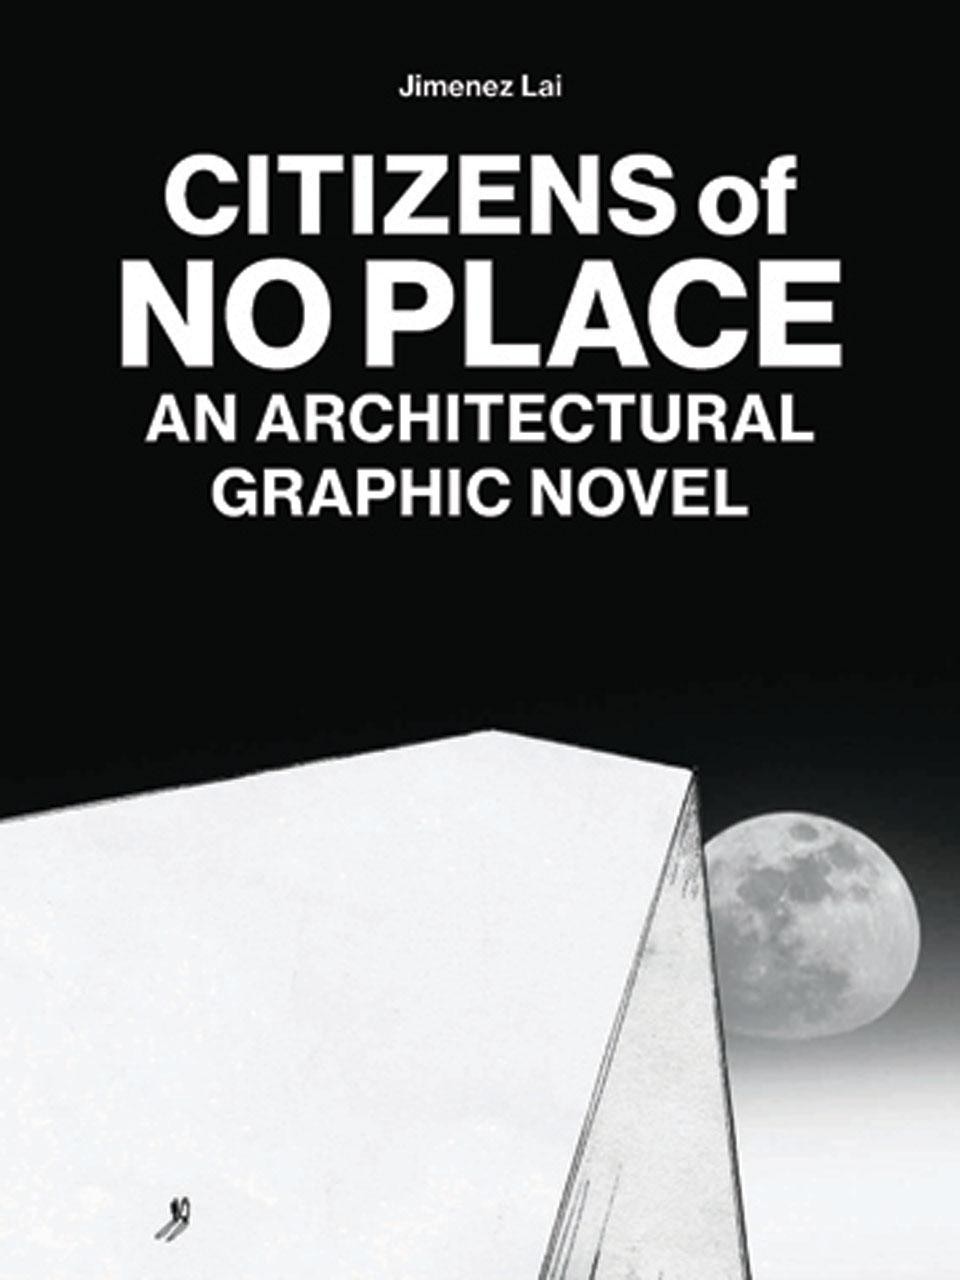 Jimenez Lai, <em>Citizens of No Place. An Architectural Graphic Novel</em>, Princeton Architectural Press, New York, 2012. Cover